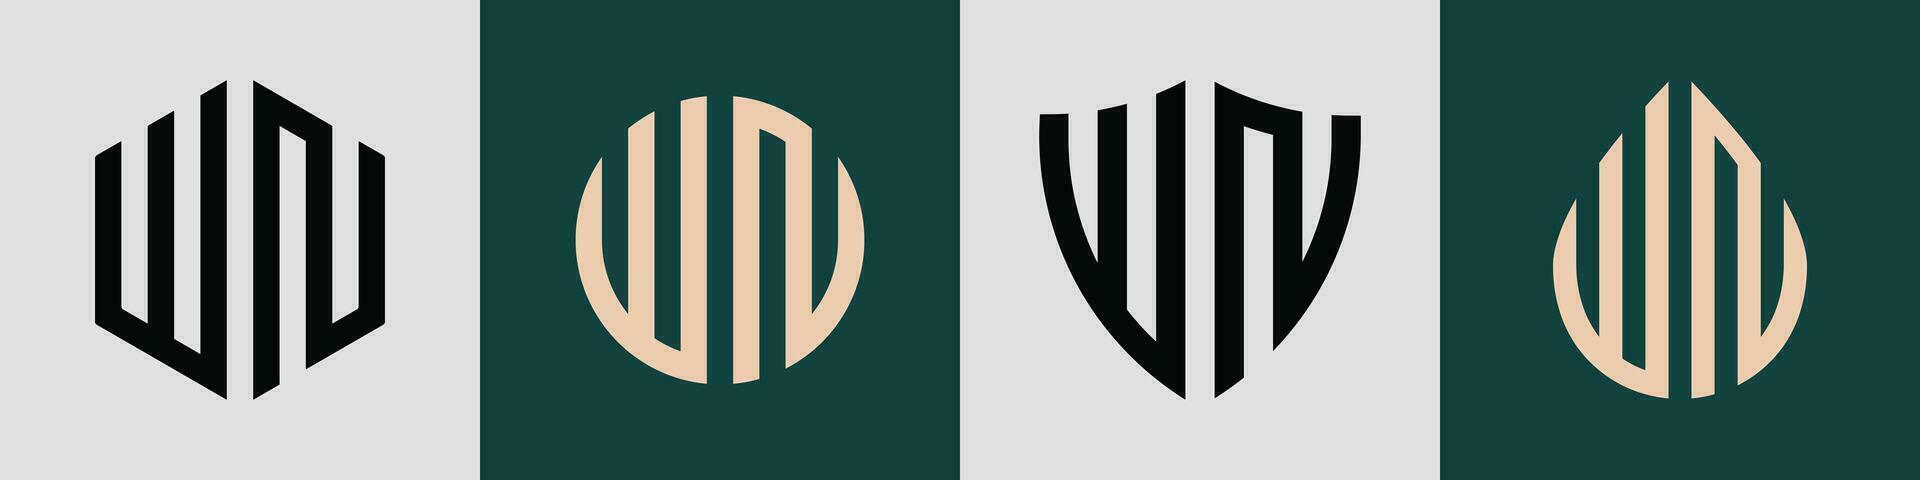 creativo sencillo inicial letras wn logo diseños manojo. vector